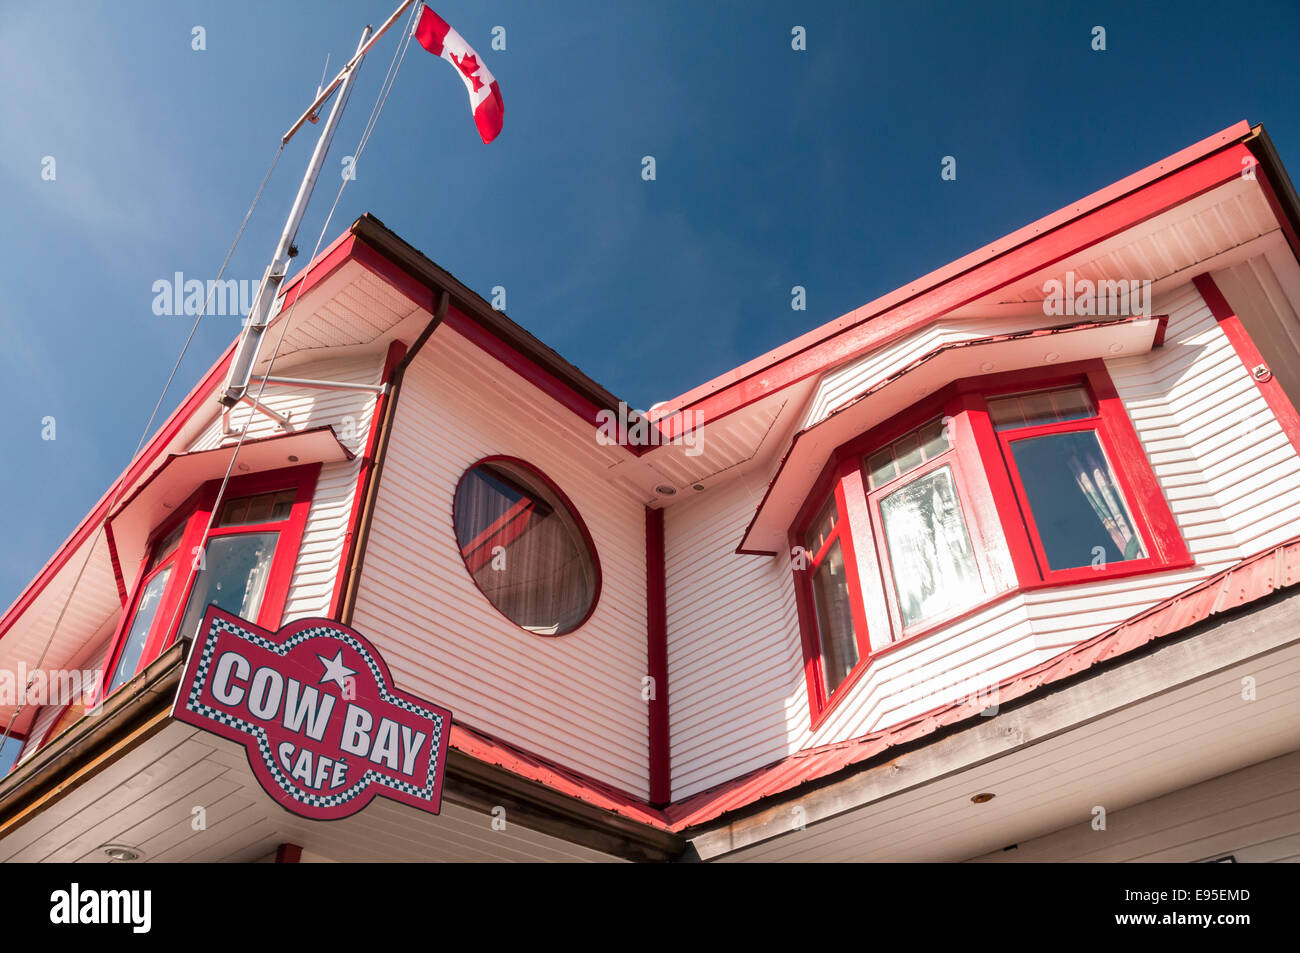 Cow Bay Cafe, Prince Rupert, British Columbia, Canada Stock Photo